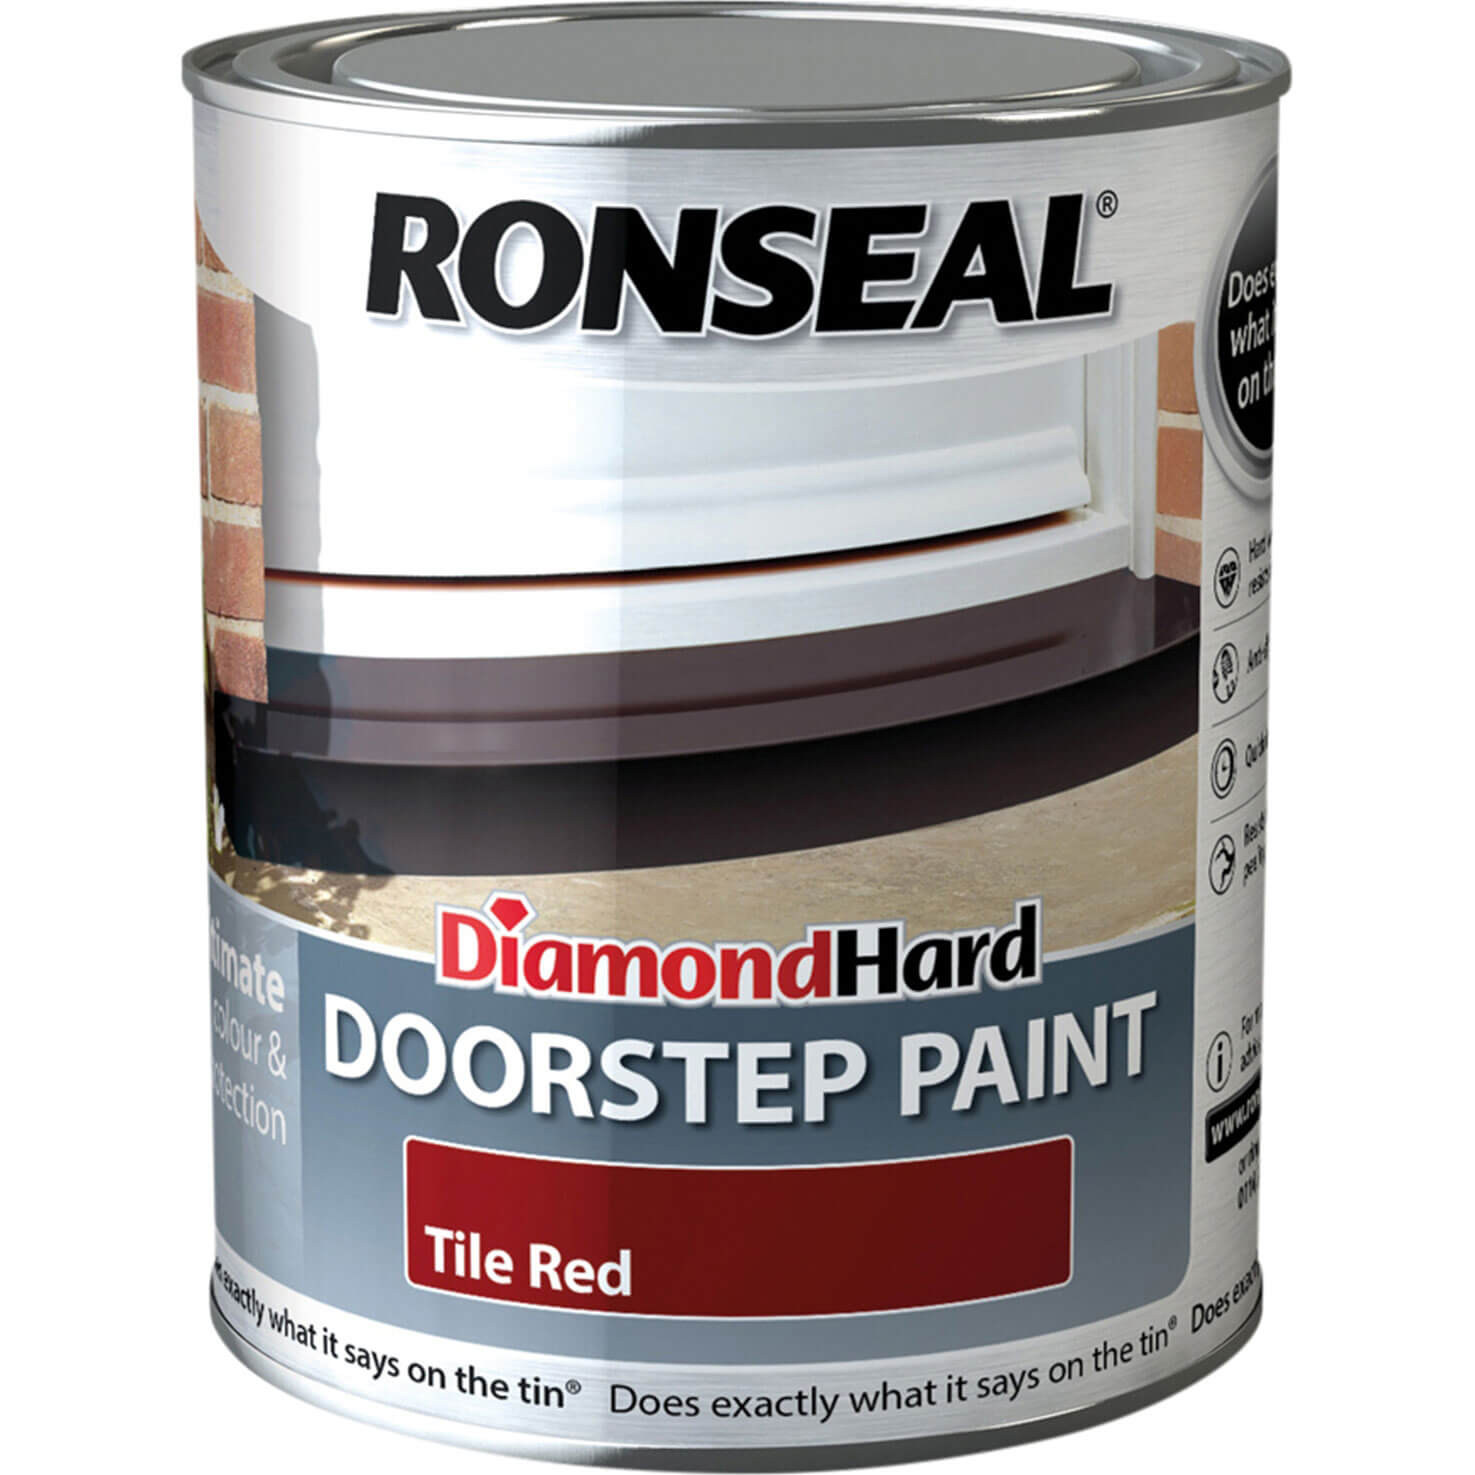 Image of Ronseal Diamond Hard Door Step Paint Tile Red 750ml